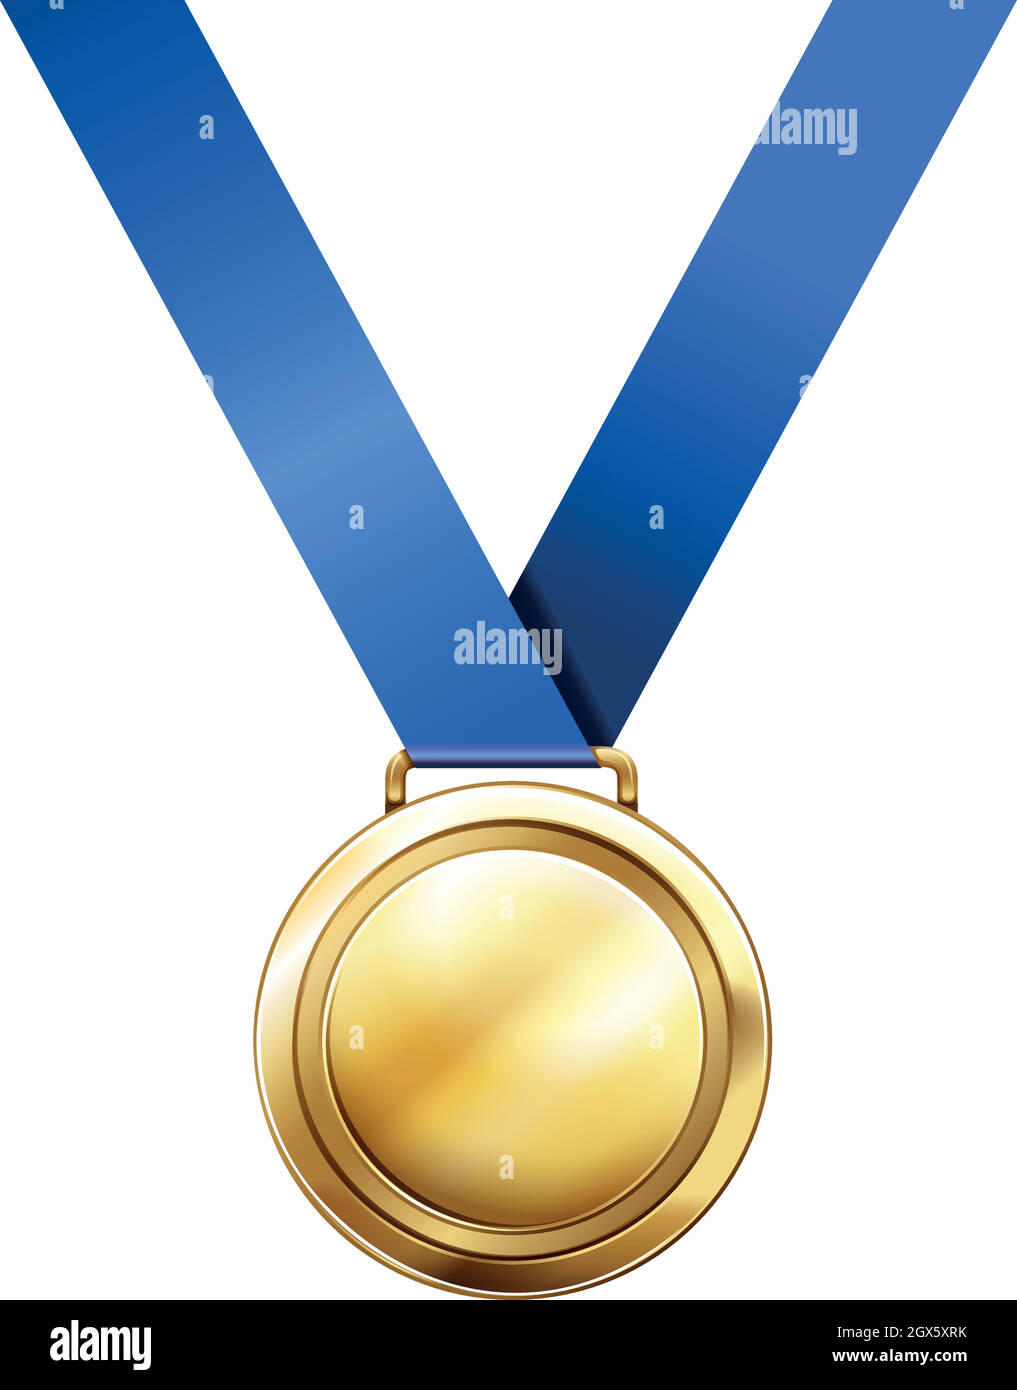 Medal with ribbon Banque d'images vectorielles - Alamy